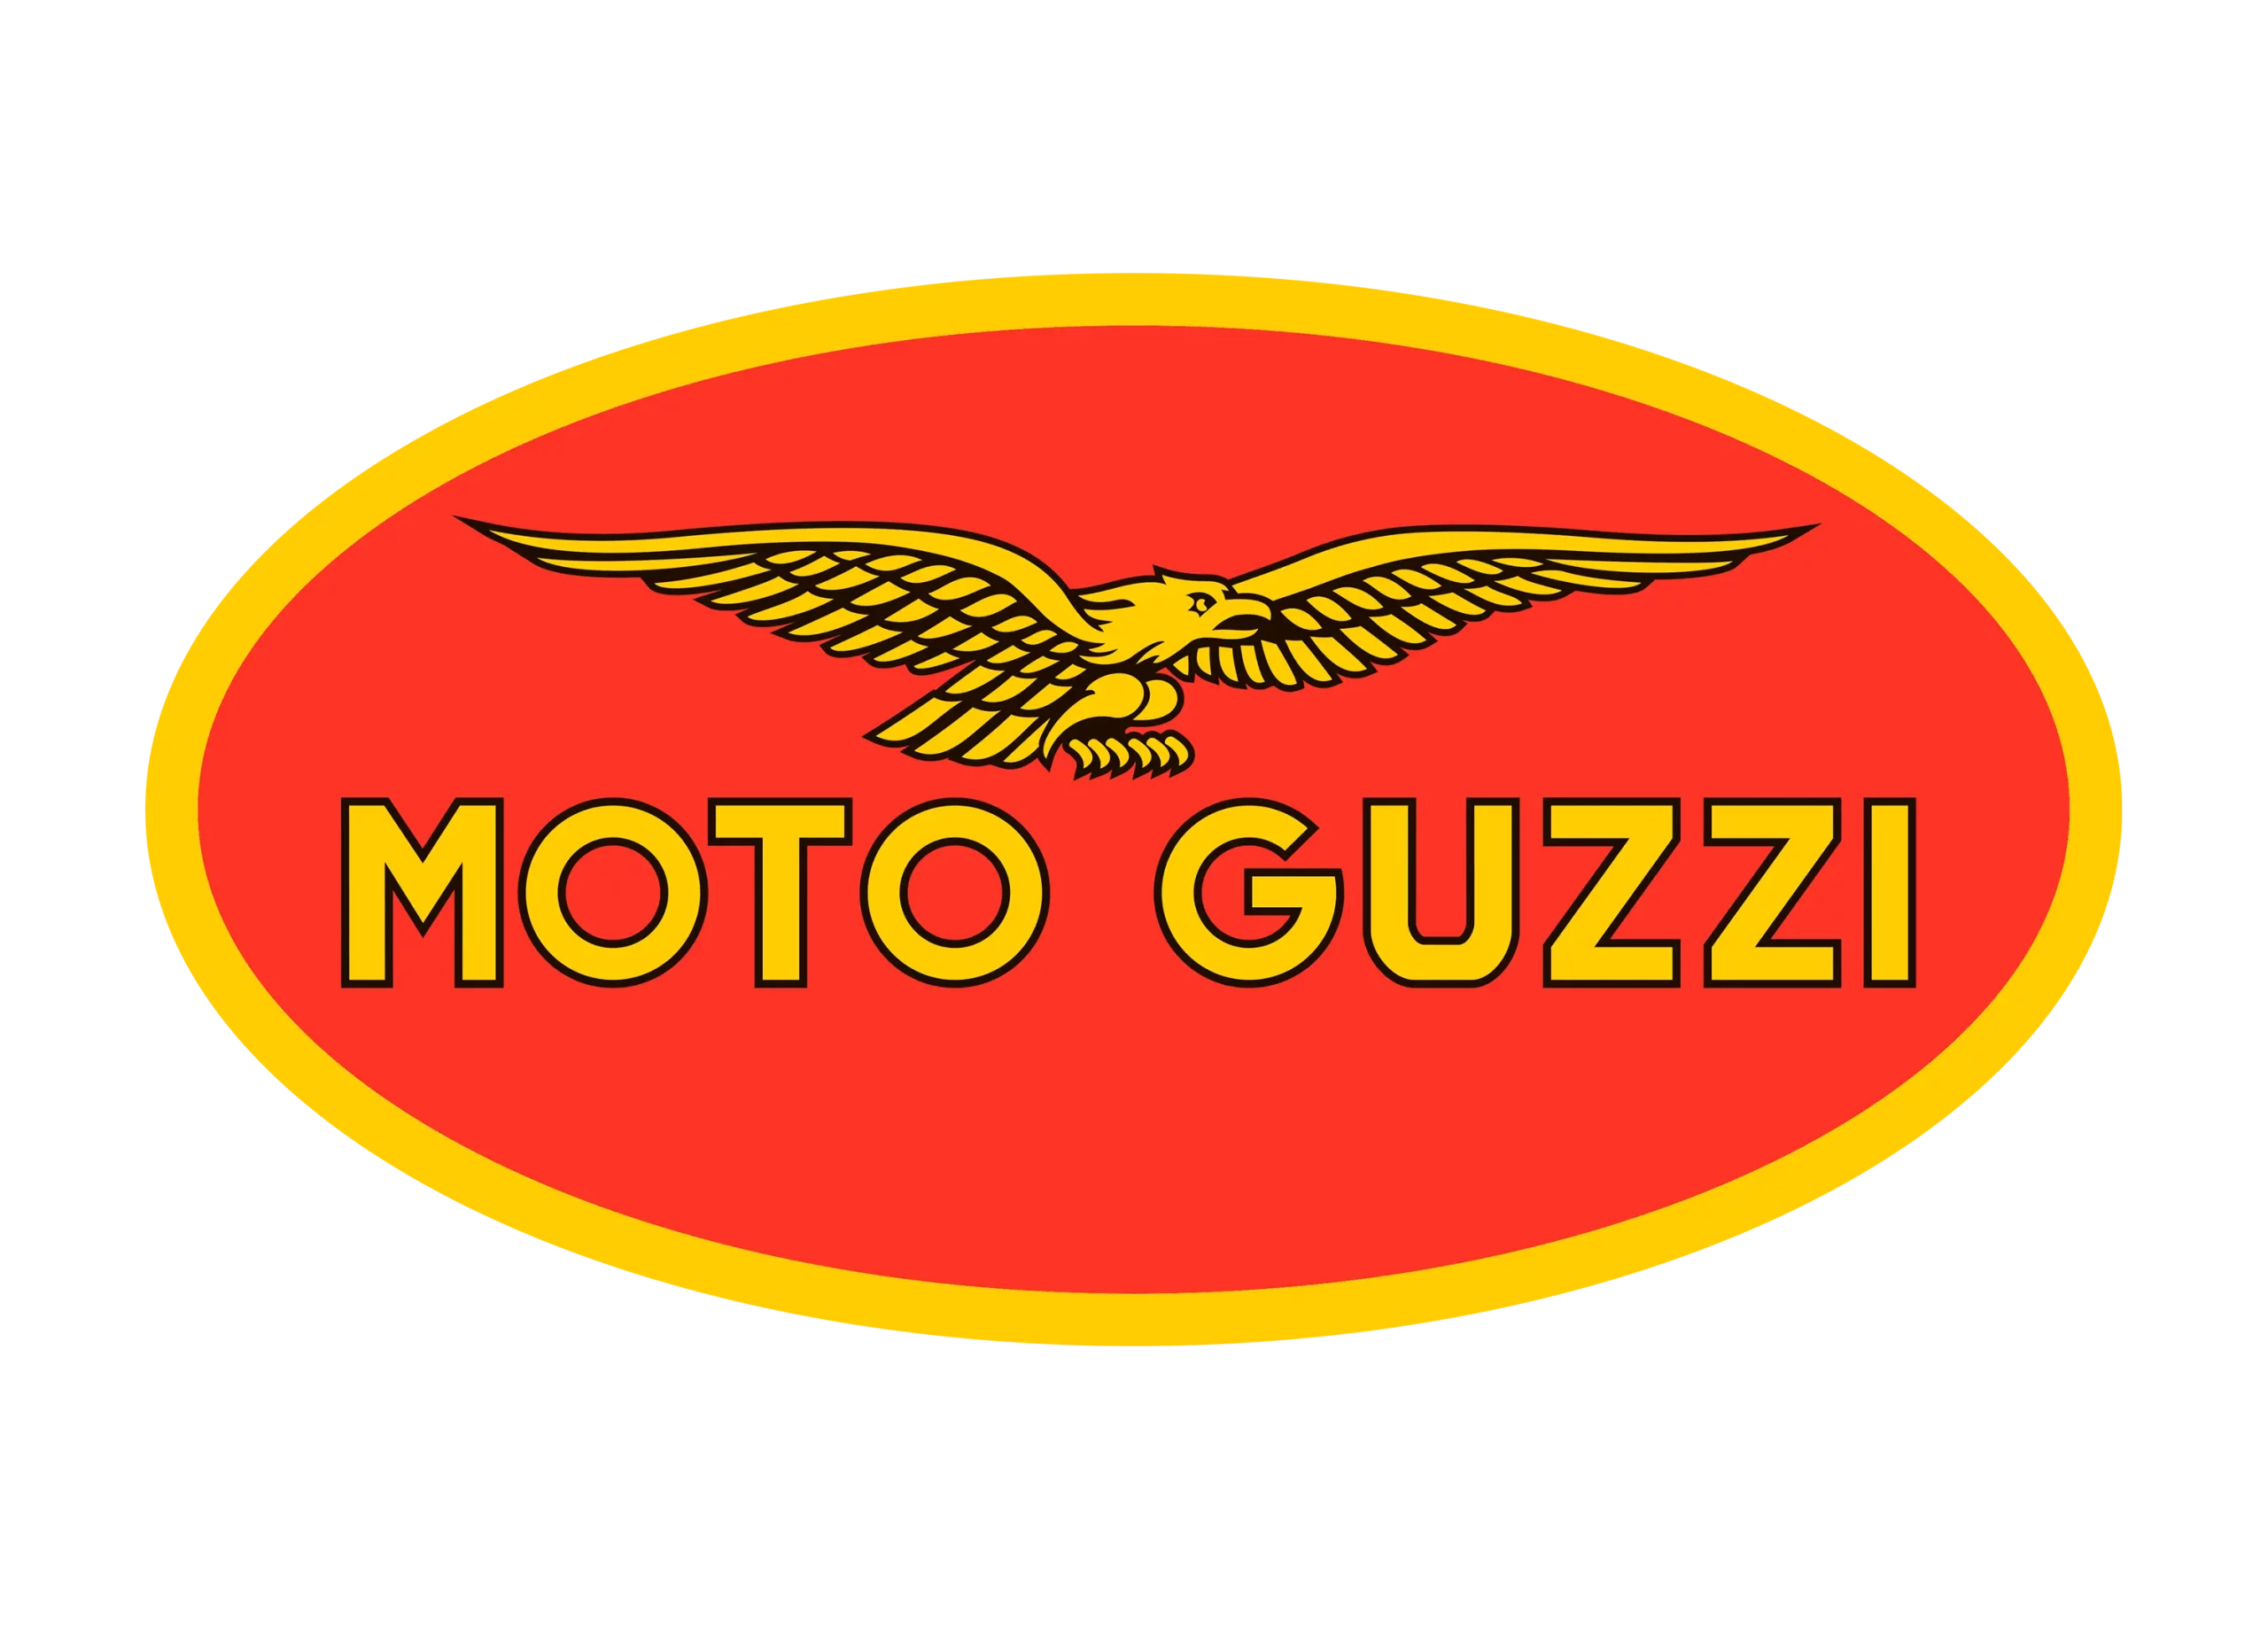 Moto Guzzi logo 1994-2007